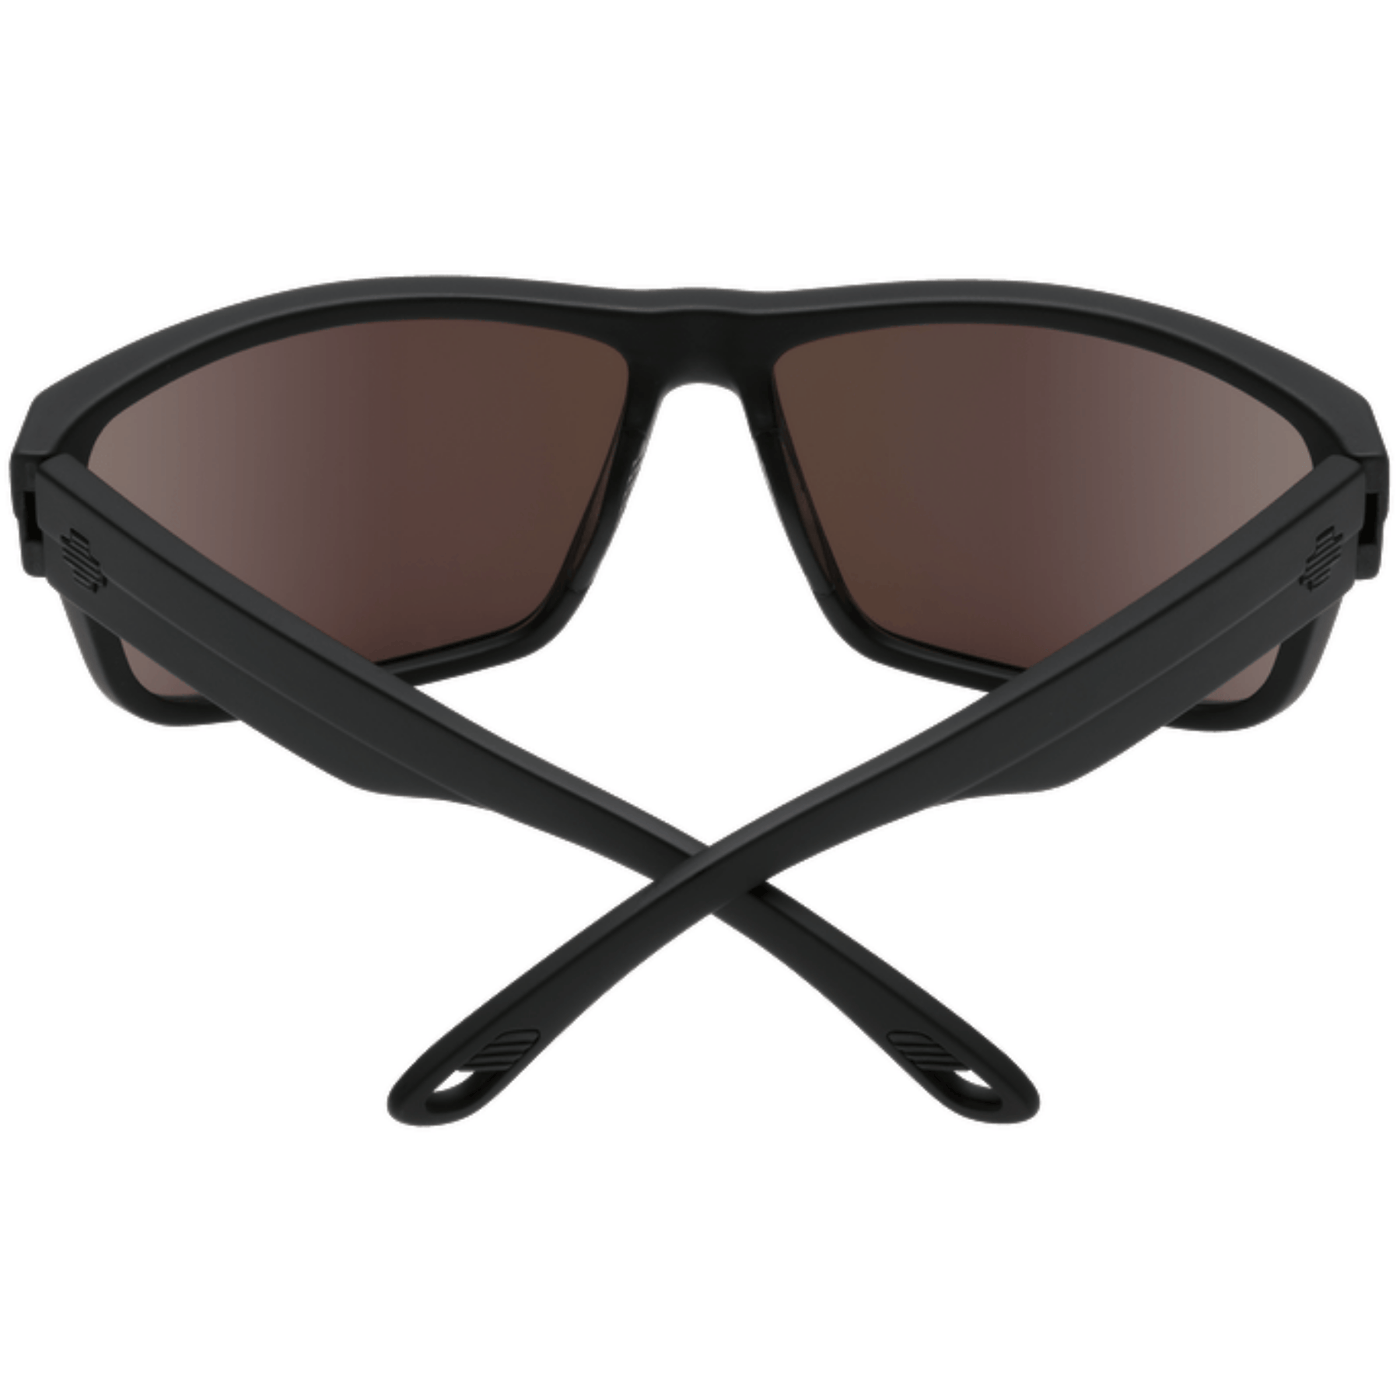 SPY ROCKY Polarized Sunglasses, Happy Lens - Green 8Lines Shop - Fast Shipping